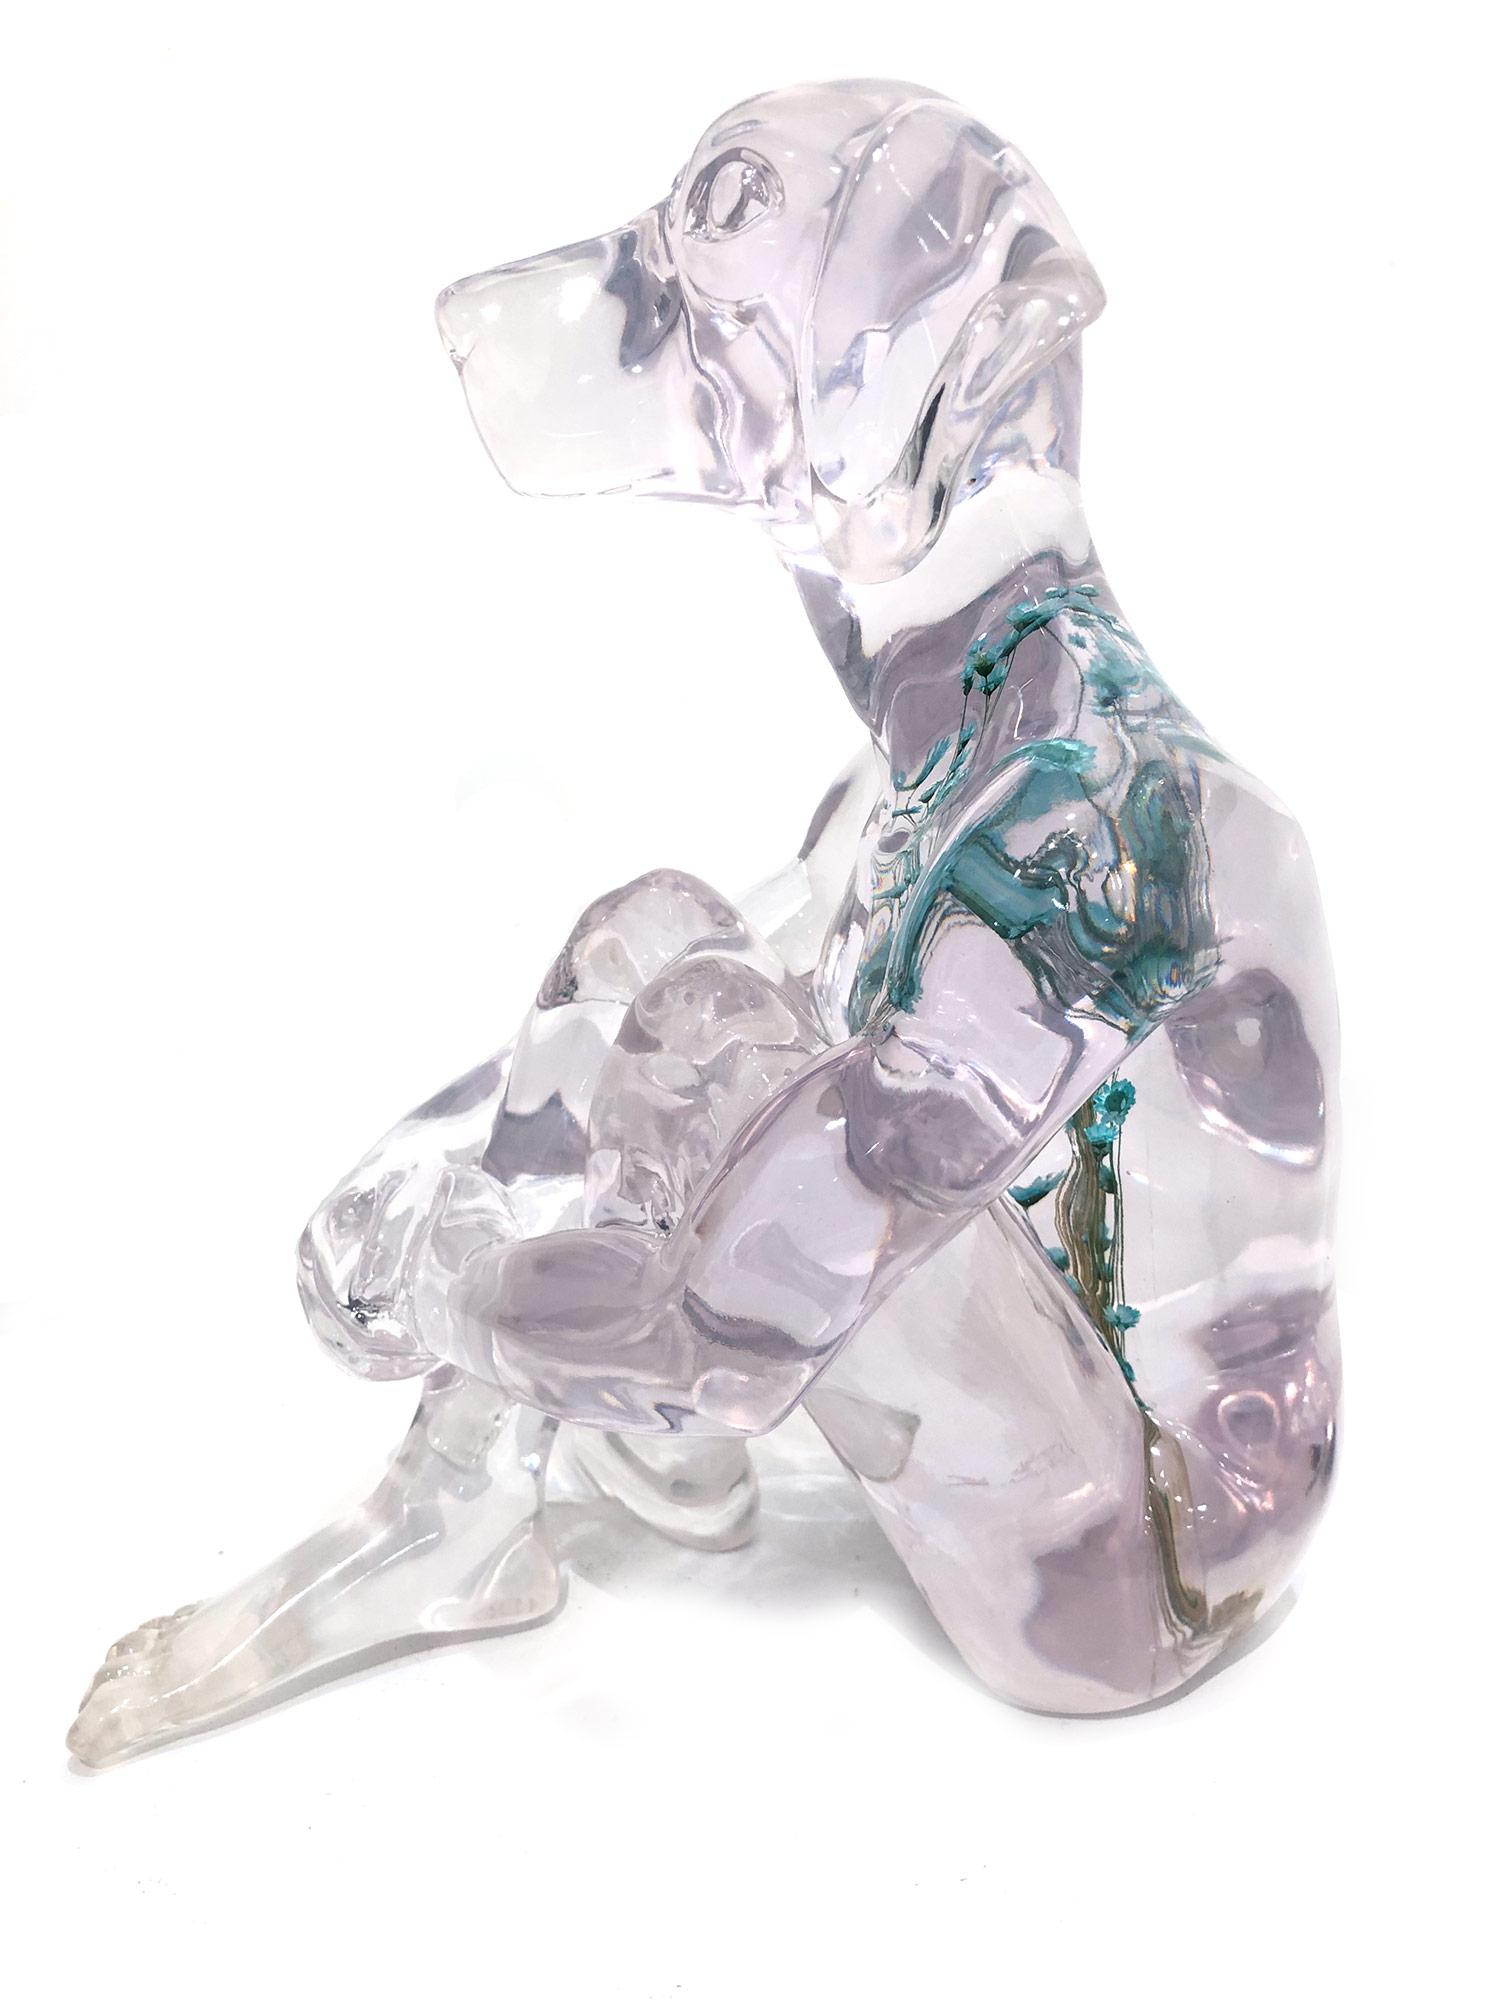 flower dog sculpture